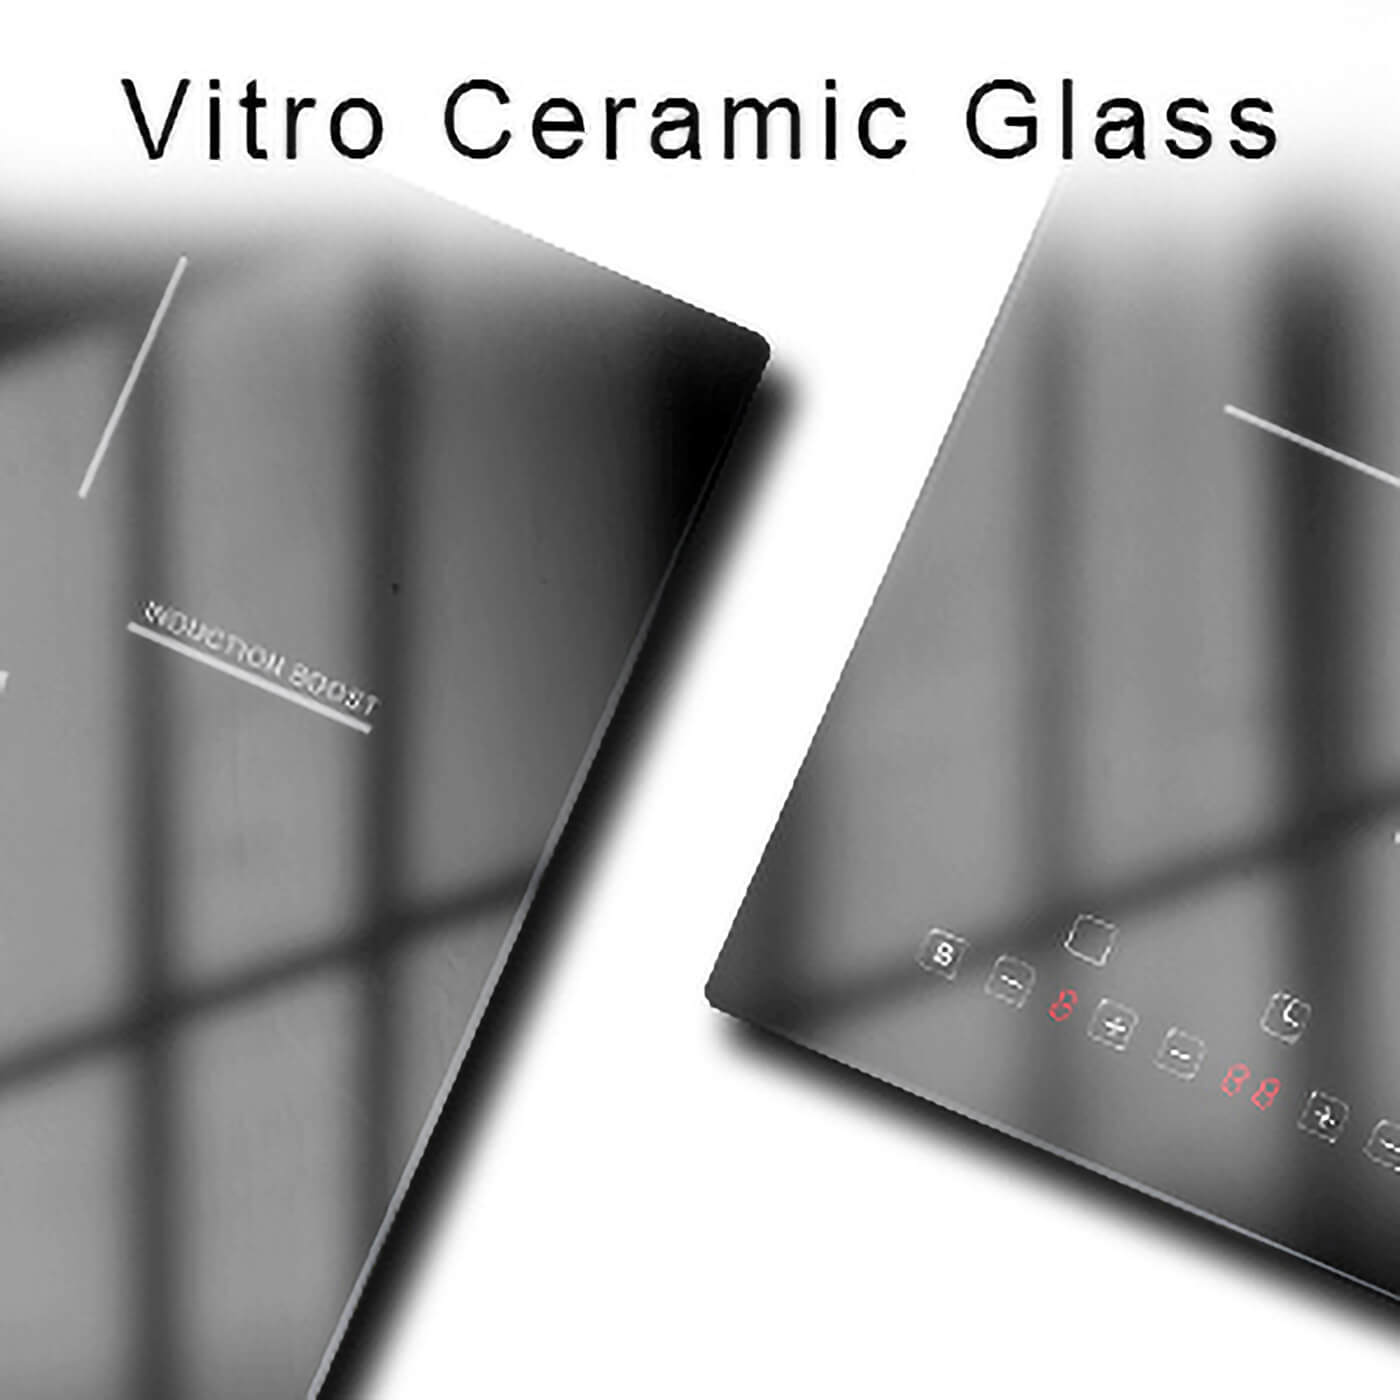 Vitro_Ceramic_Glass_electric_cooktop